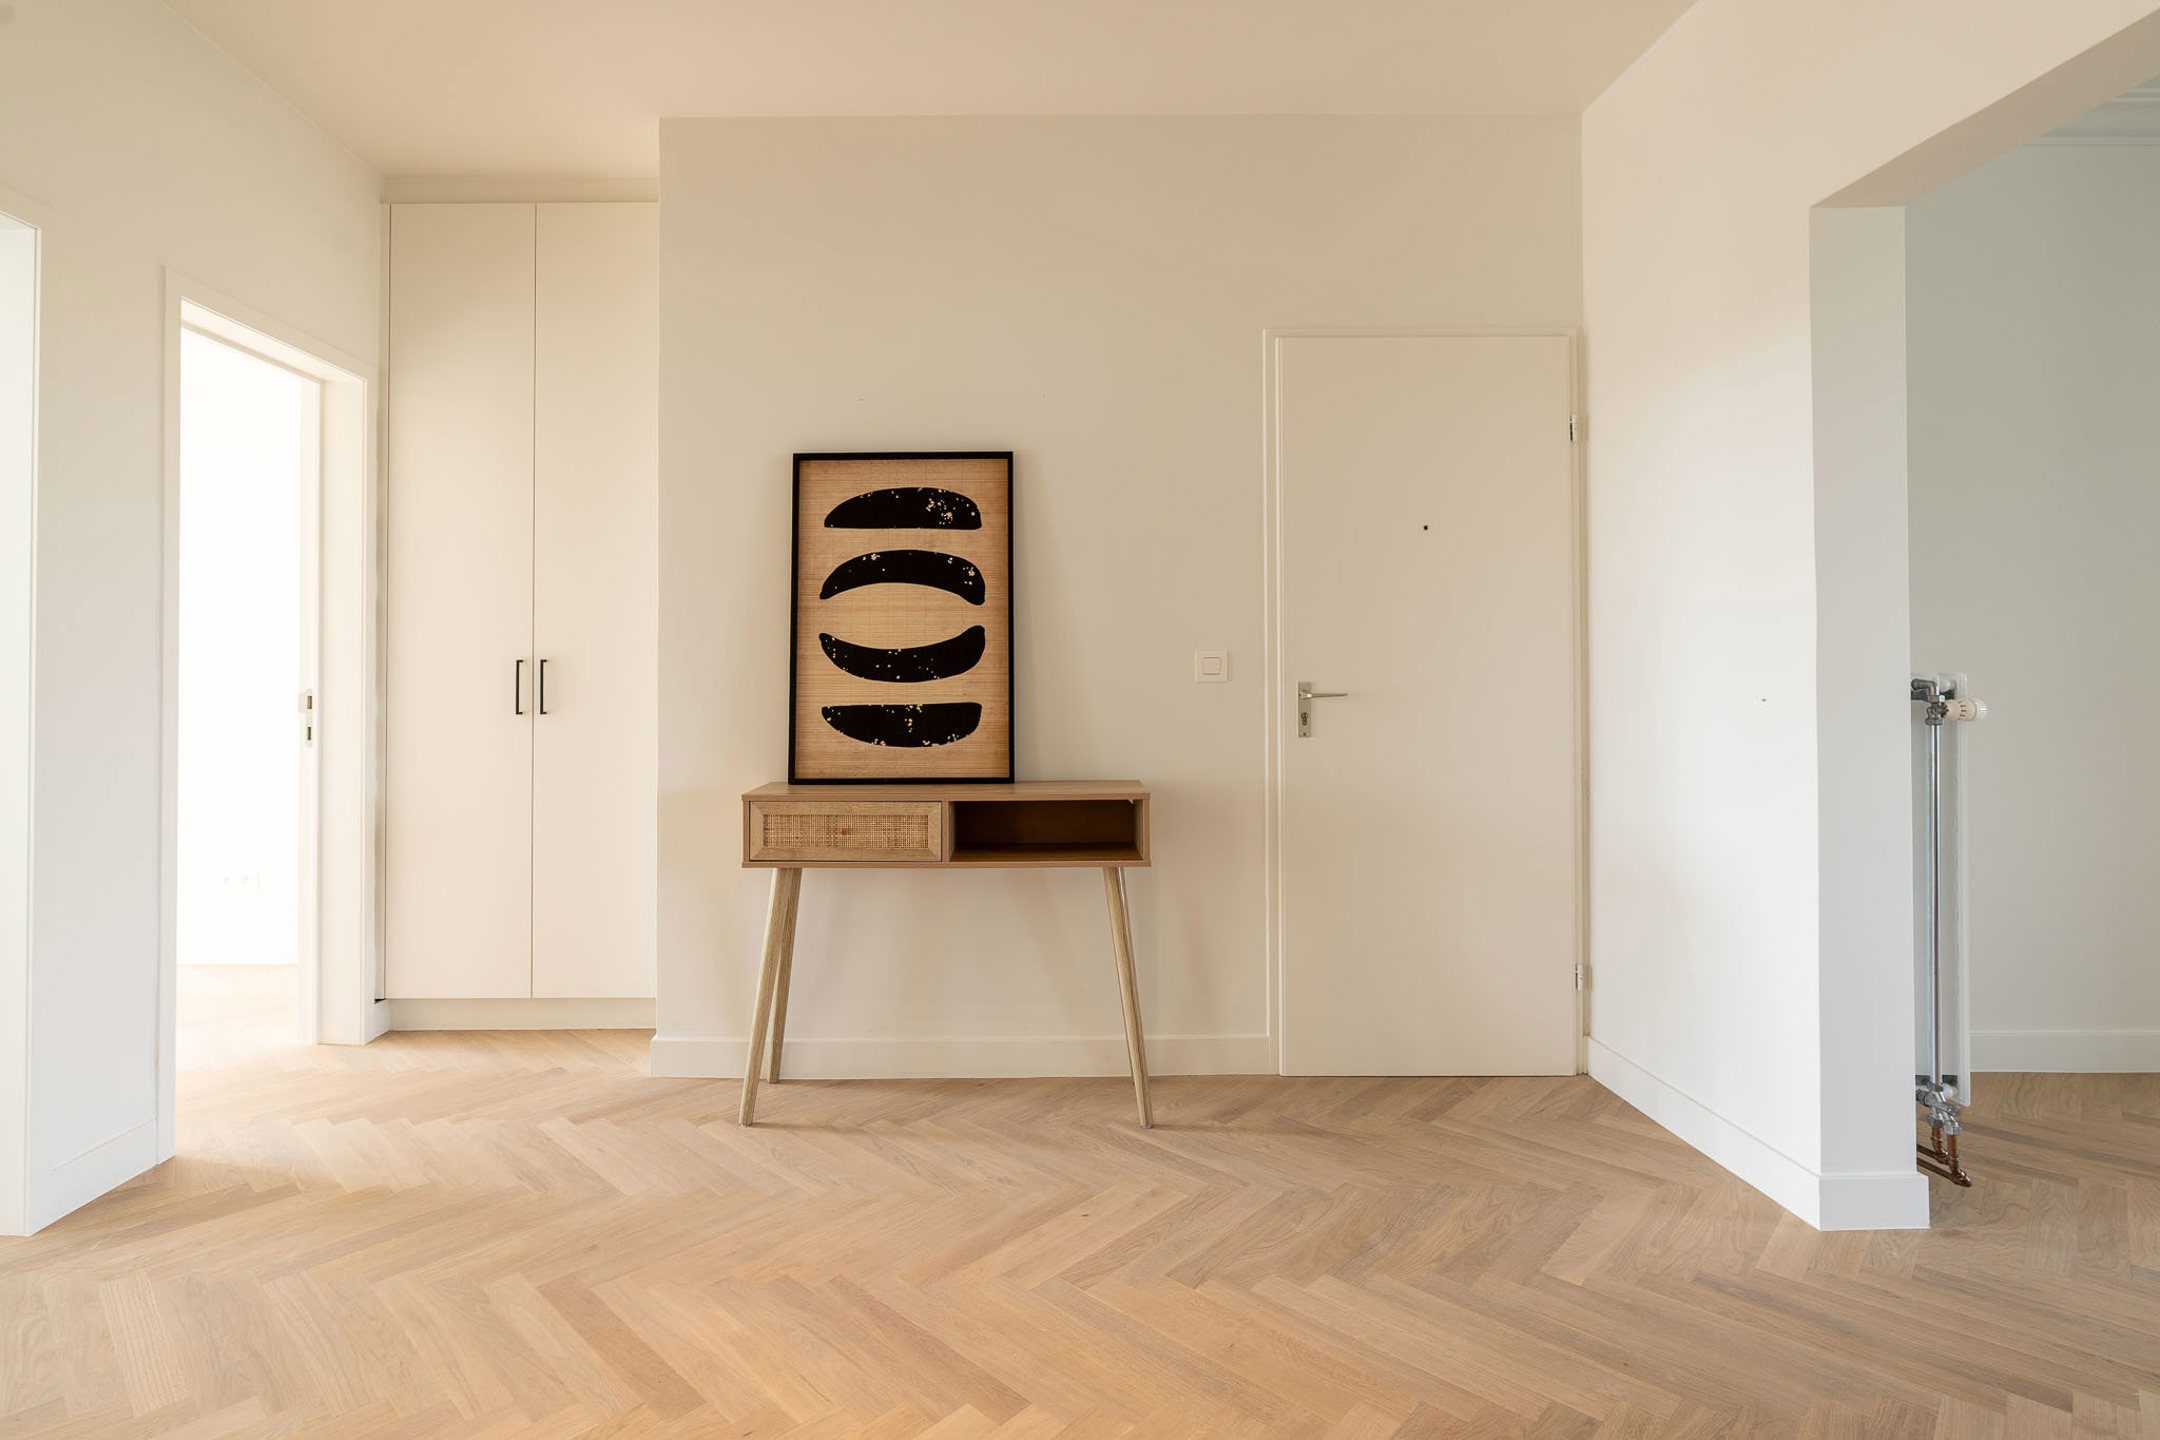 Boniverlei - 3 bedroom apartment for rent in Edegem